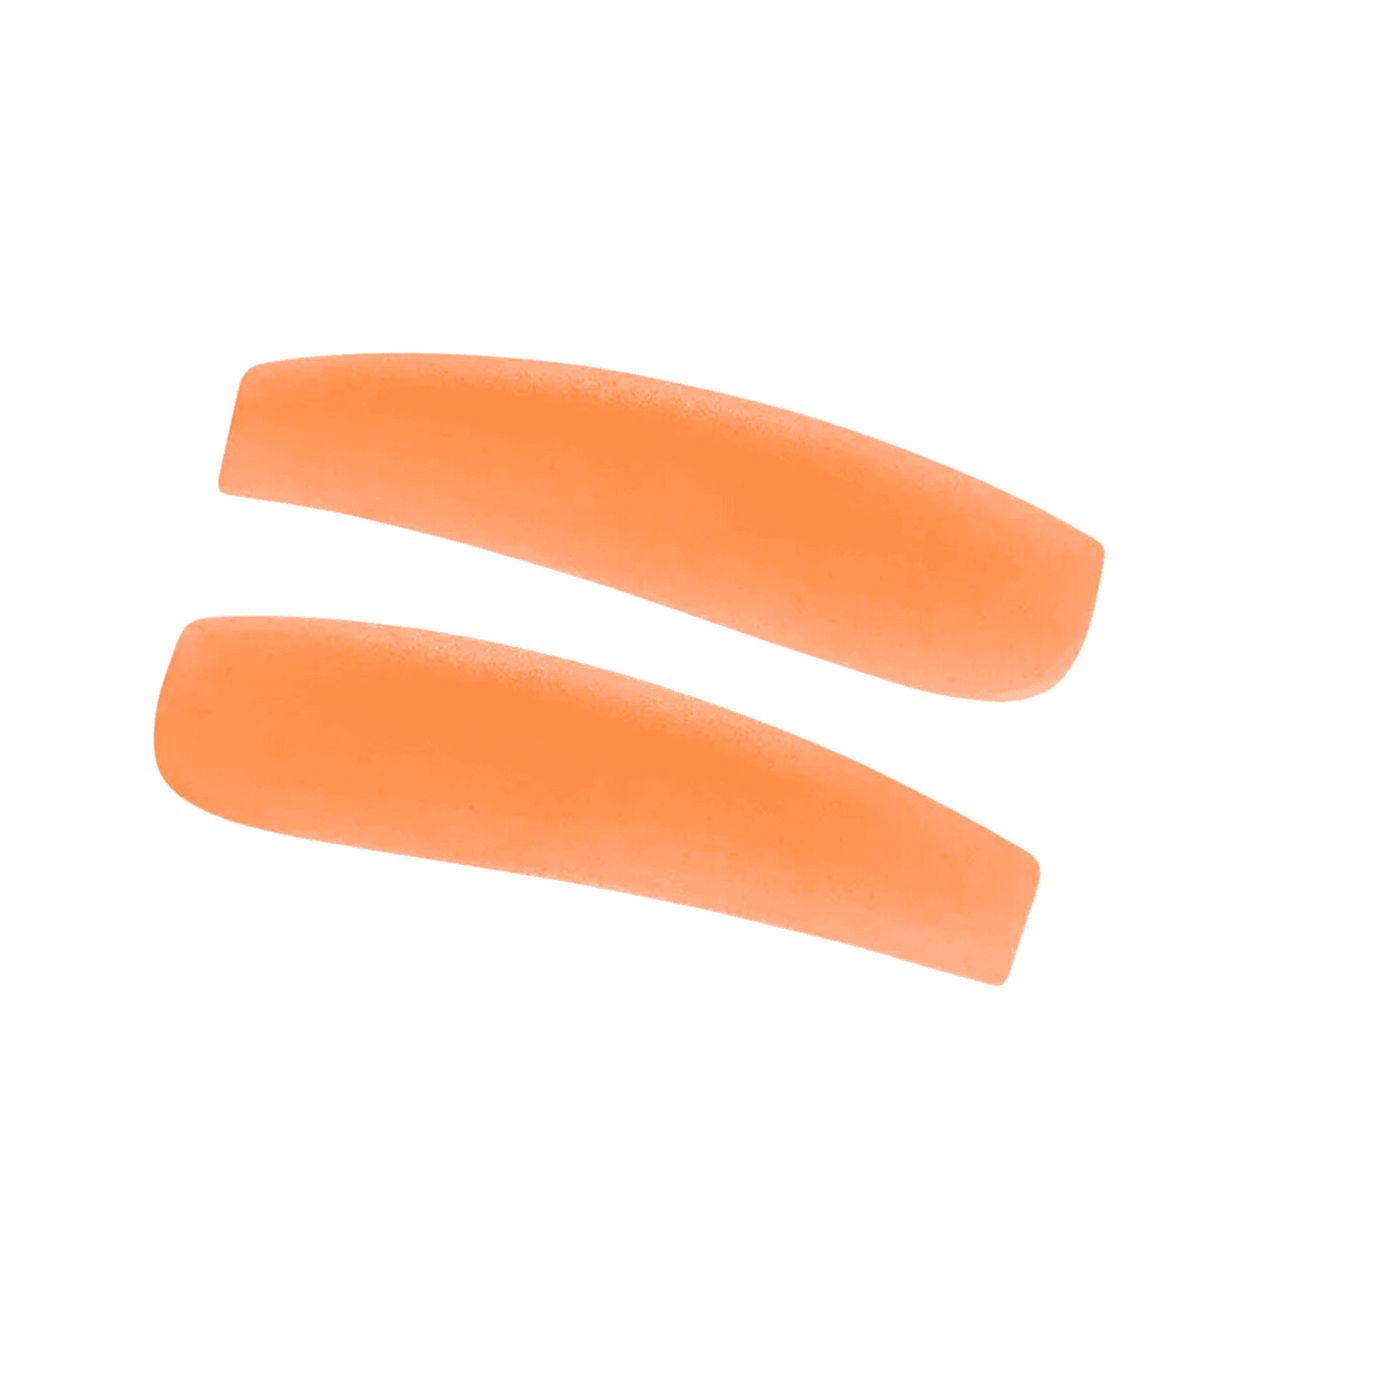 Adhesive free lash lifting shields - Orange - The London Brow Company